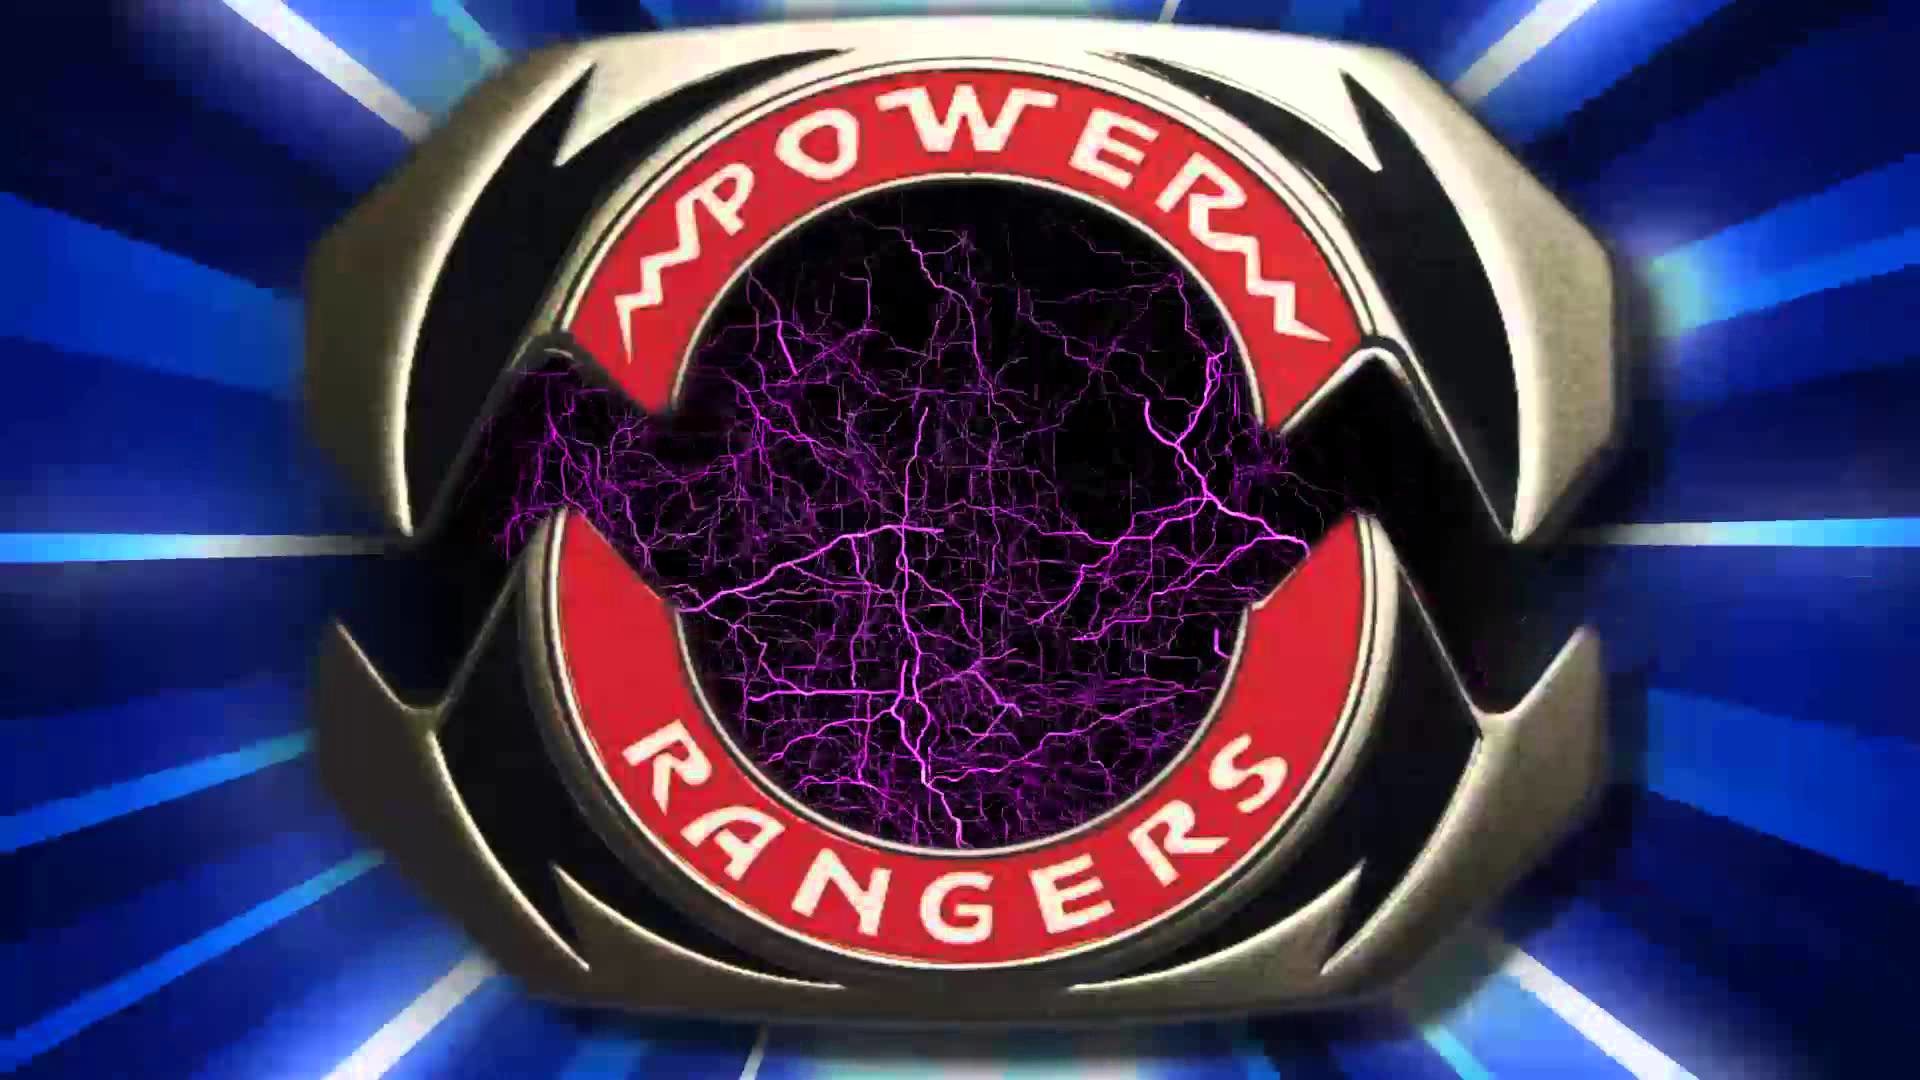 Power Rangers Morphing Background – YouTube